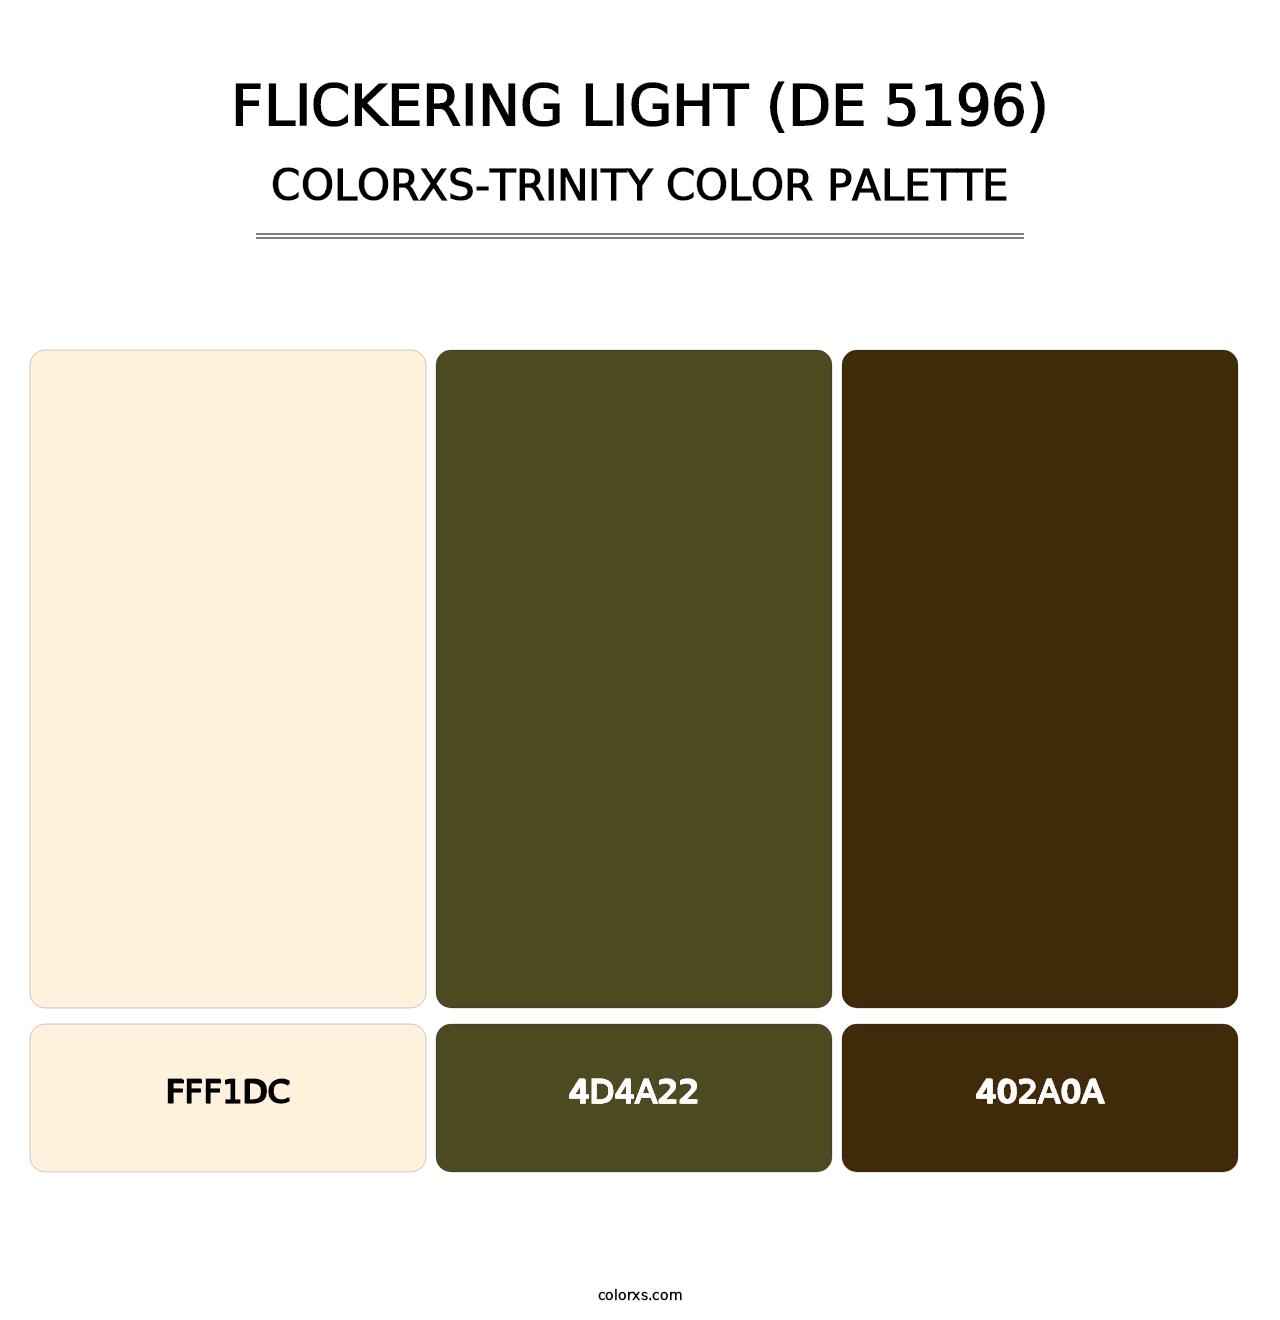 Flickering Light (DE 5196) - Colorxs Trinity Palette